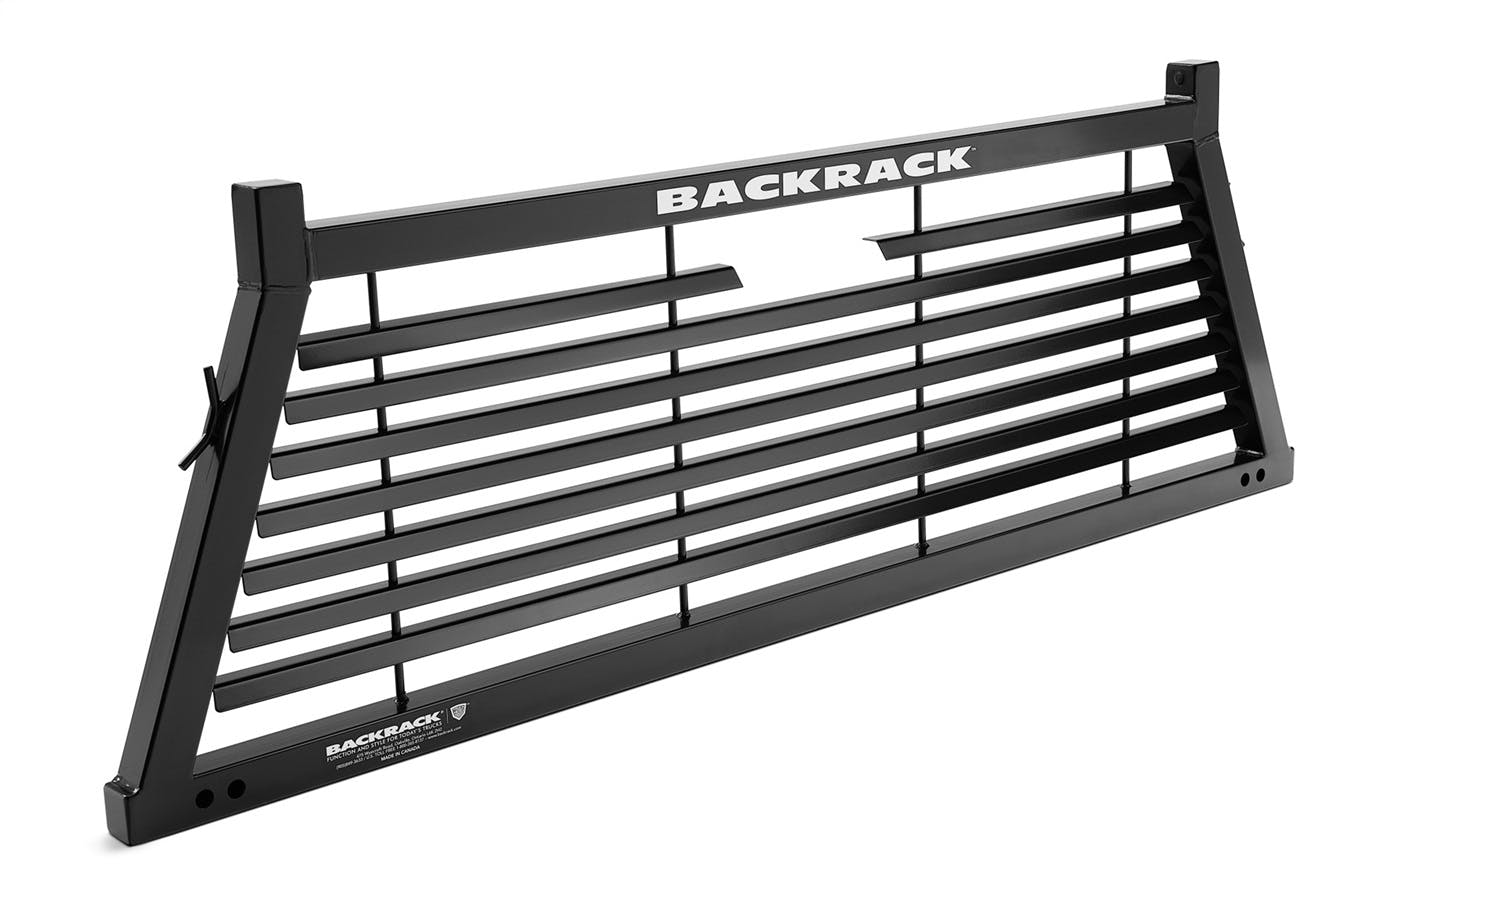 BACKRACK 12800 Frame Only, Hardware Kit Required - 30124